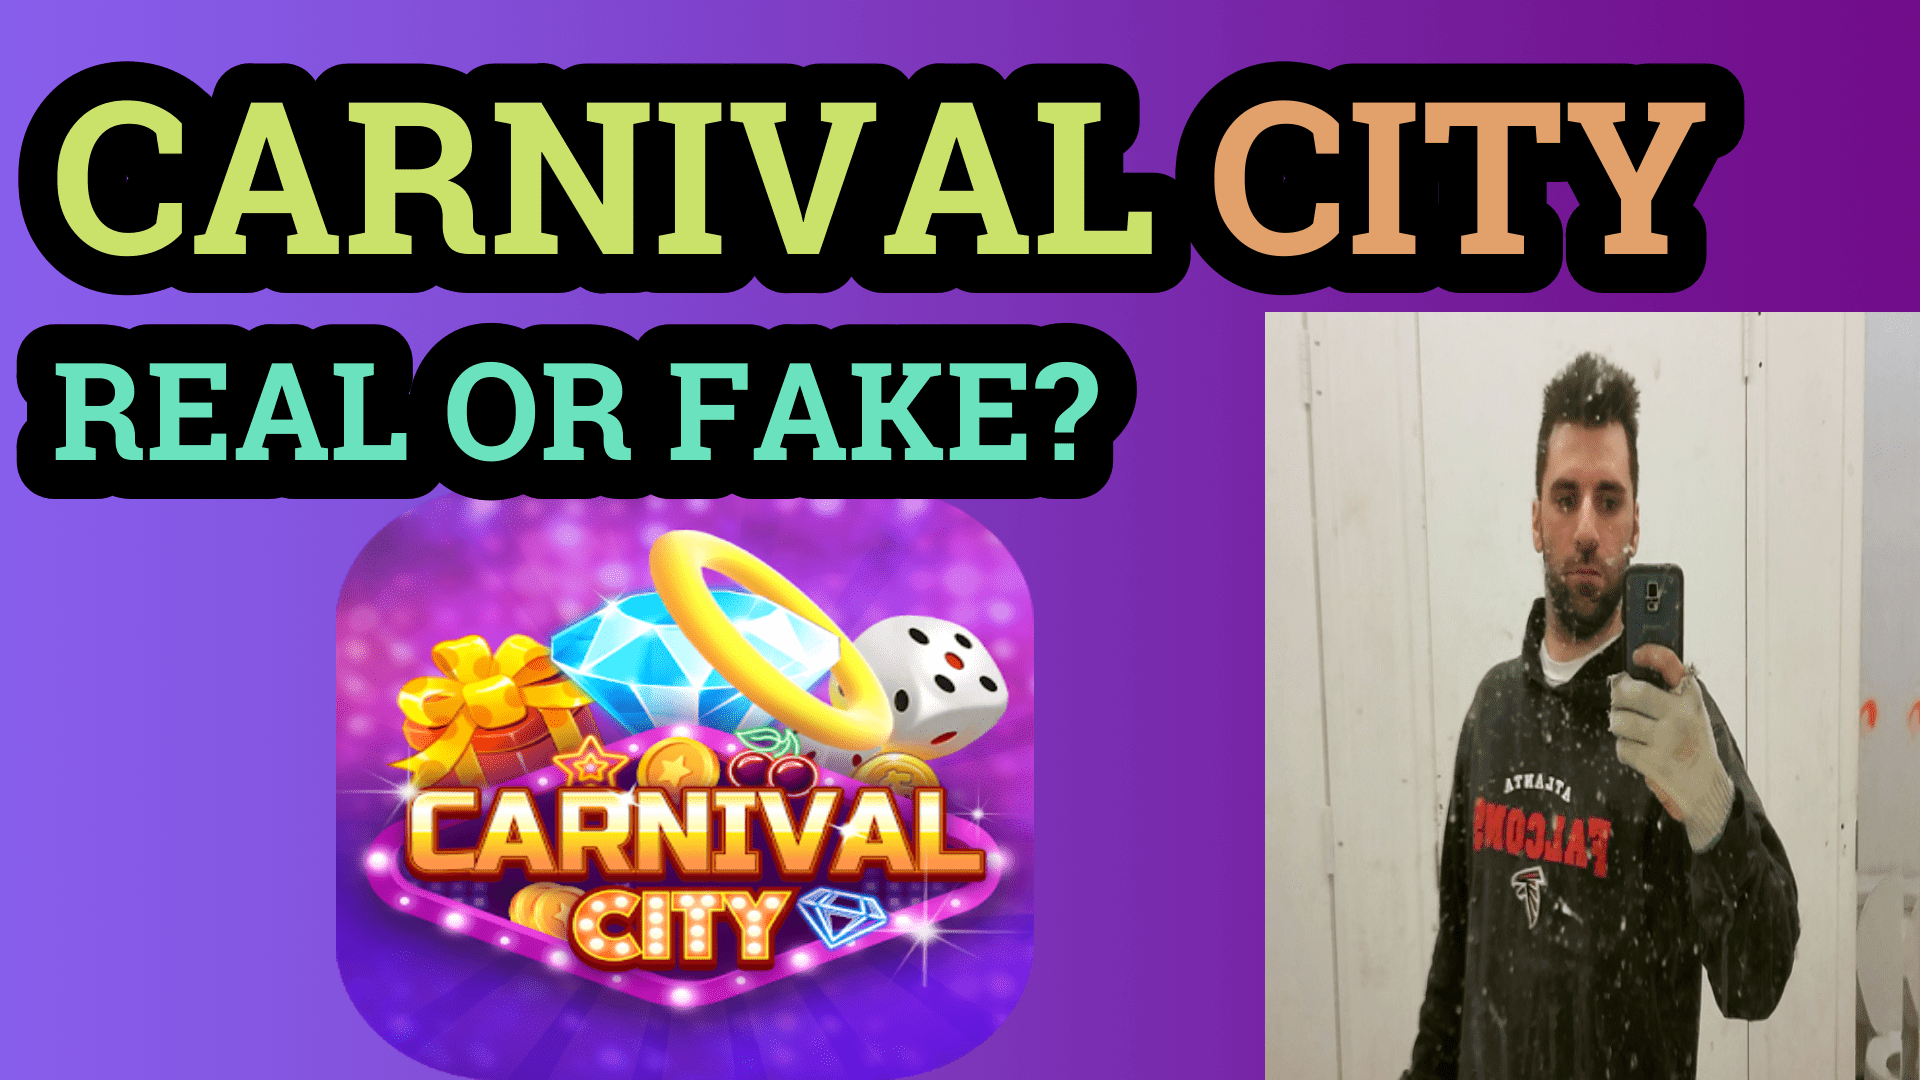 Carnival city Video game Vibez. Earn rewards for this app or platform.